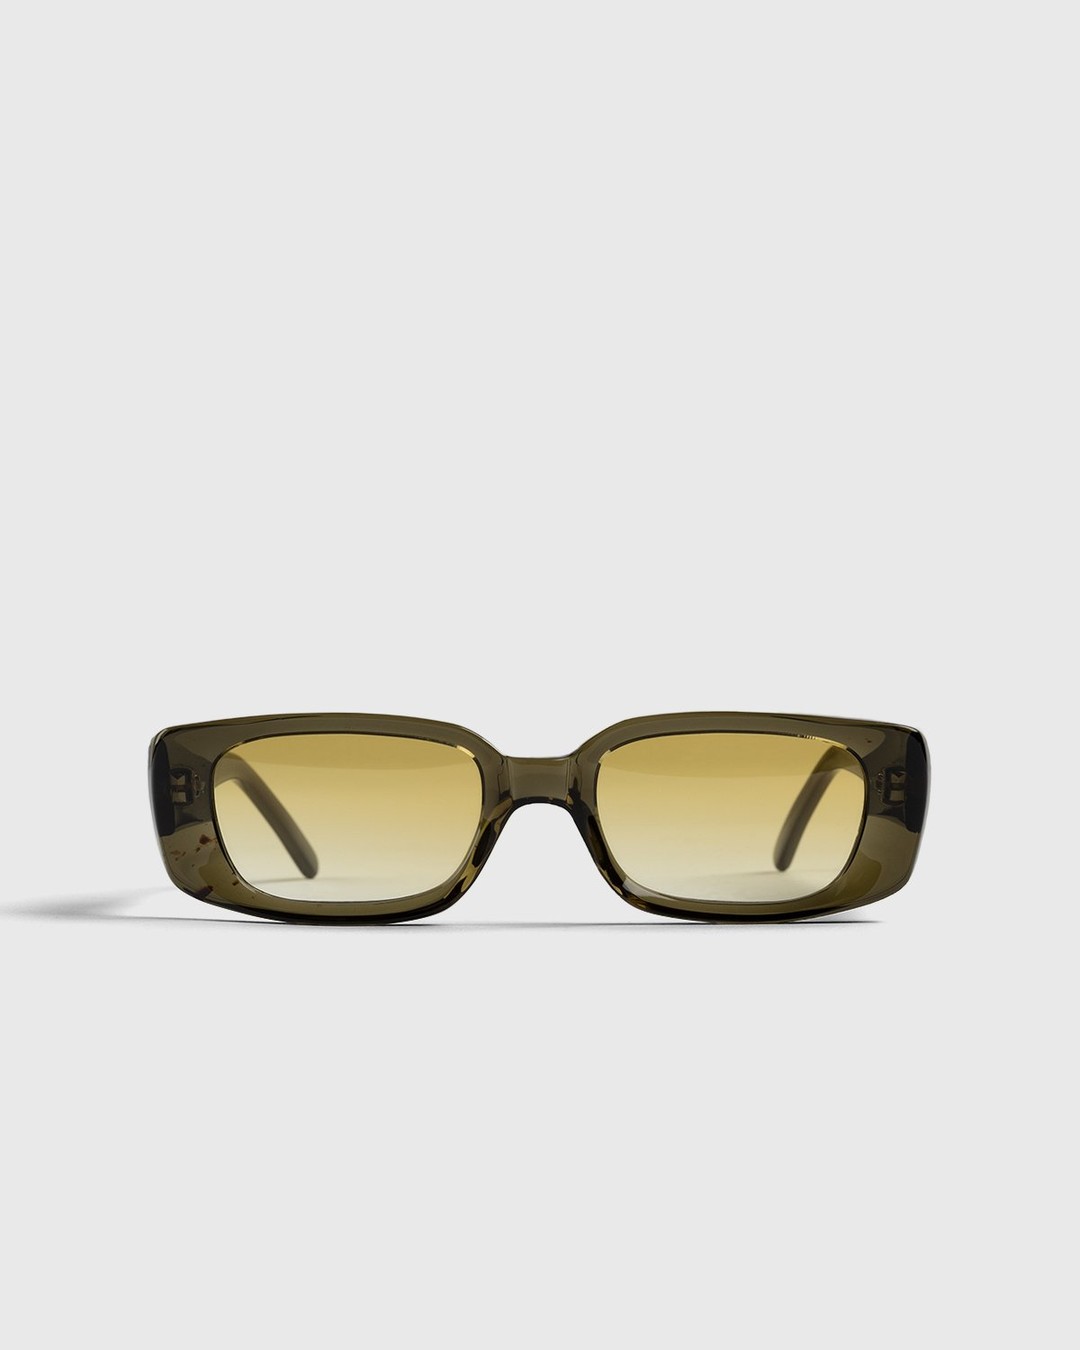 Our Legacy – Samhain Sunglasses Transparent Green - Sunglasses - Green - Image 1